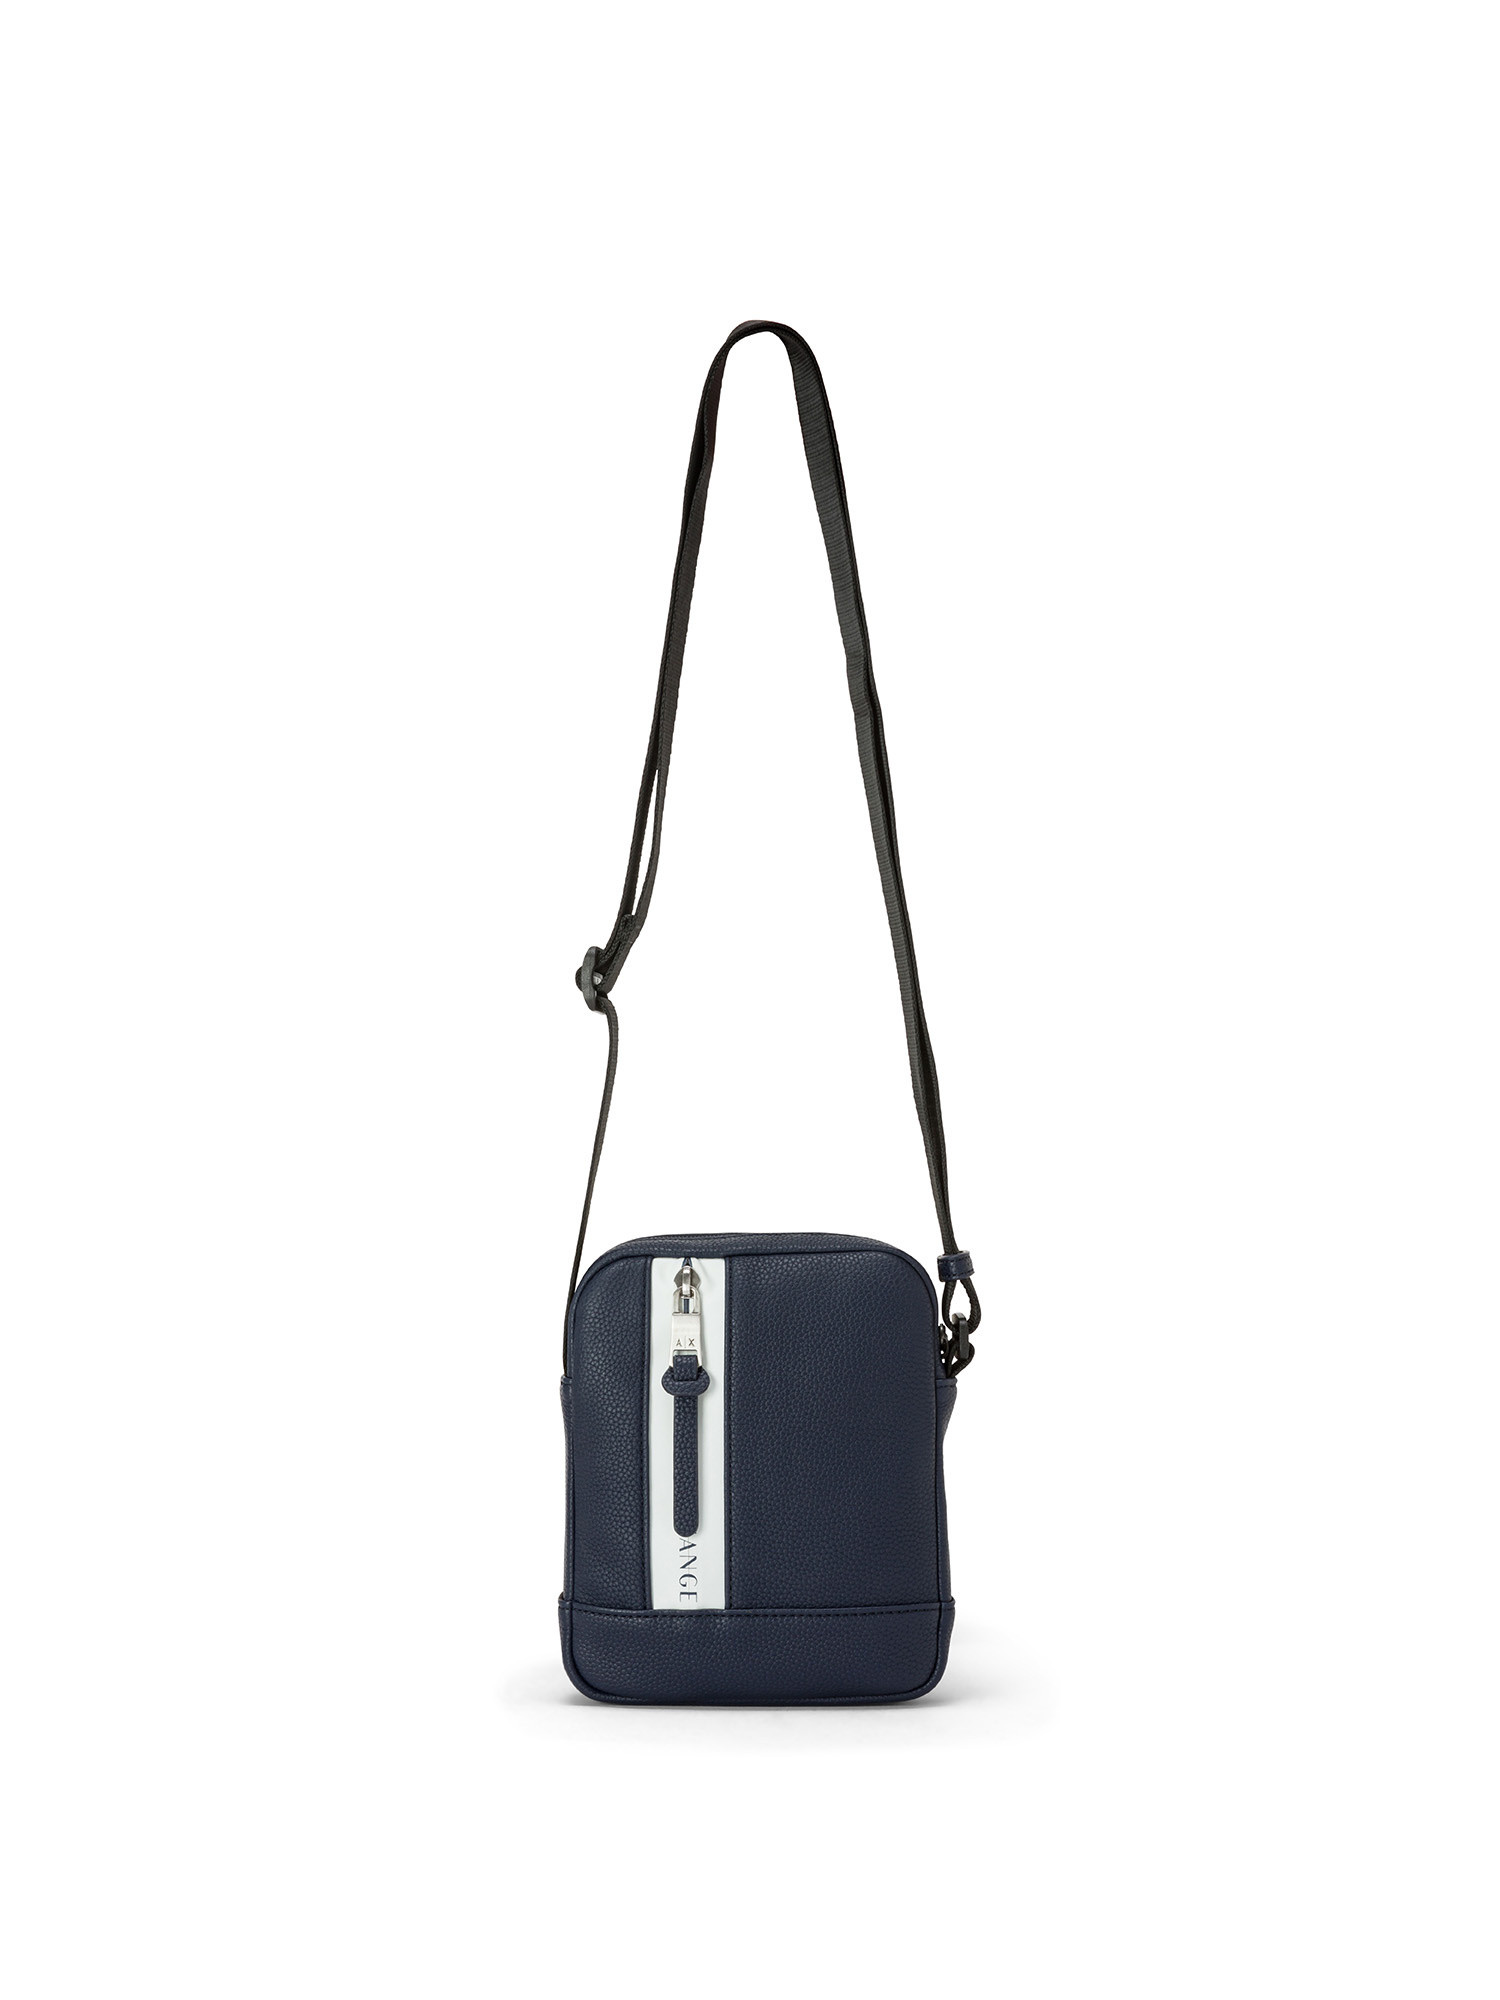 Armani Exchange - Bag with logo, Blue, large image number 0